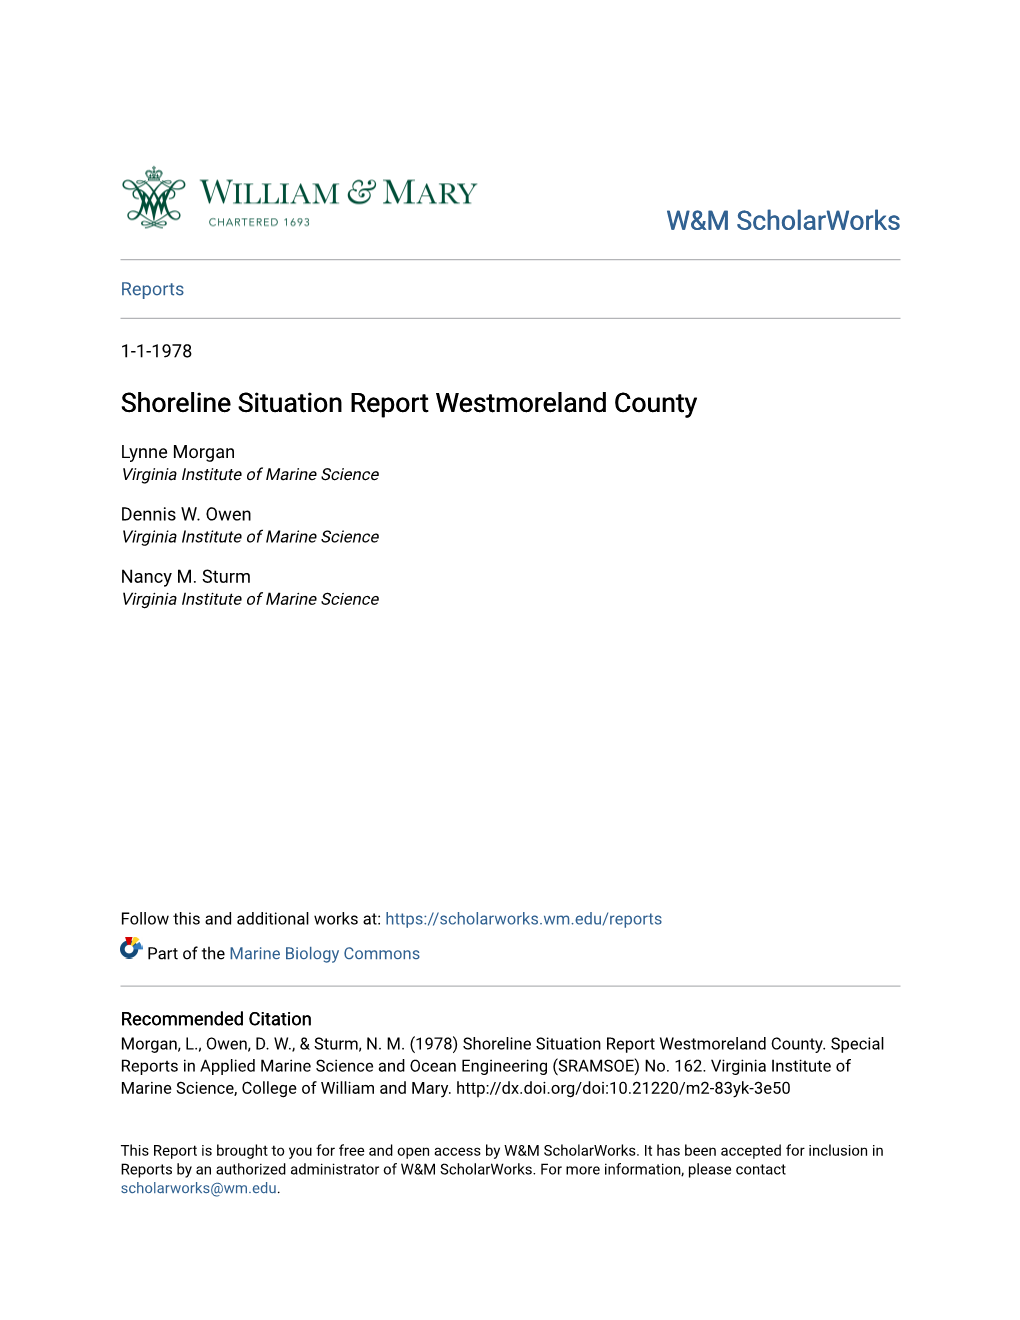 Shoreline Situation Report Westmoreland County